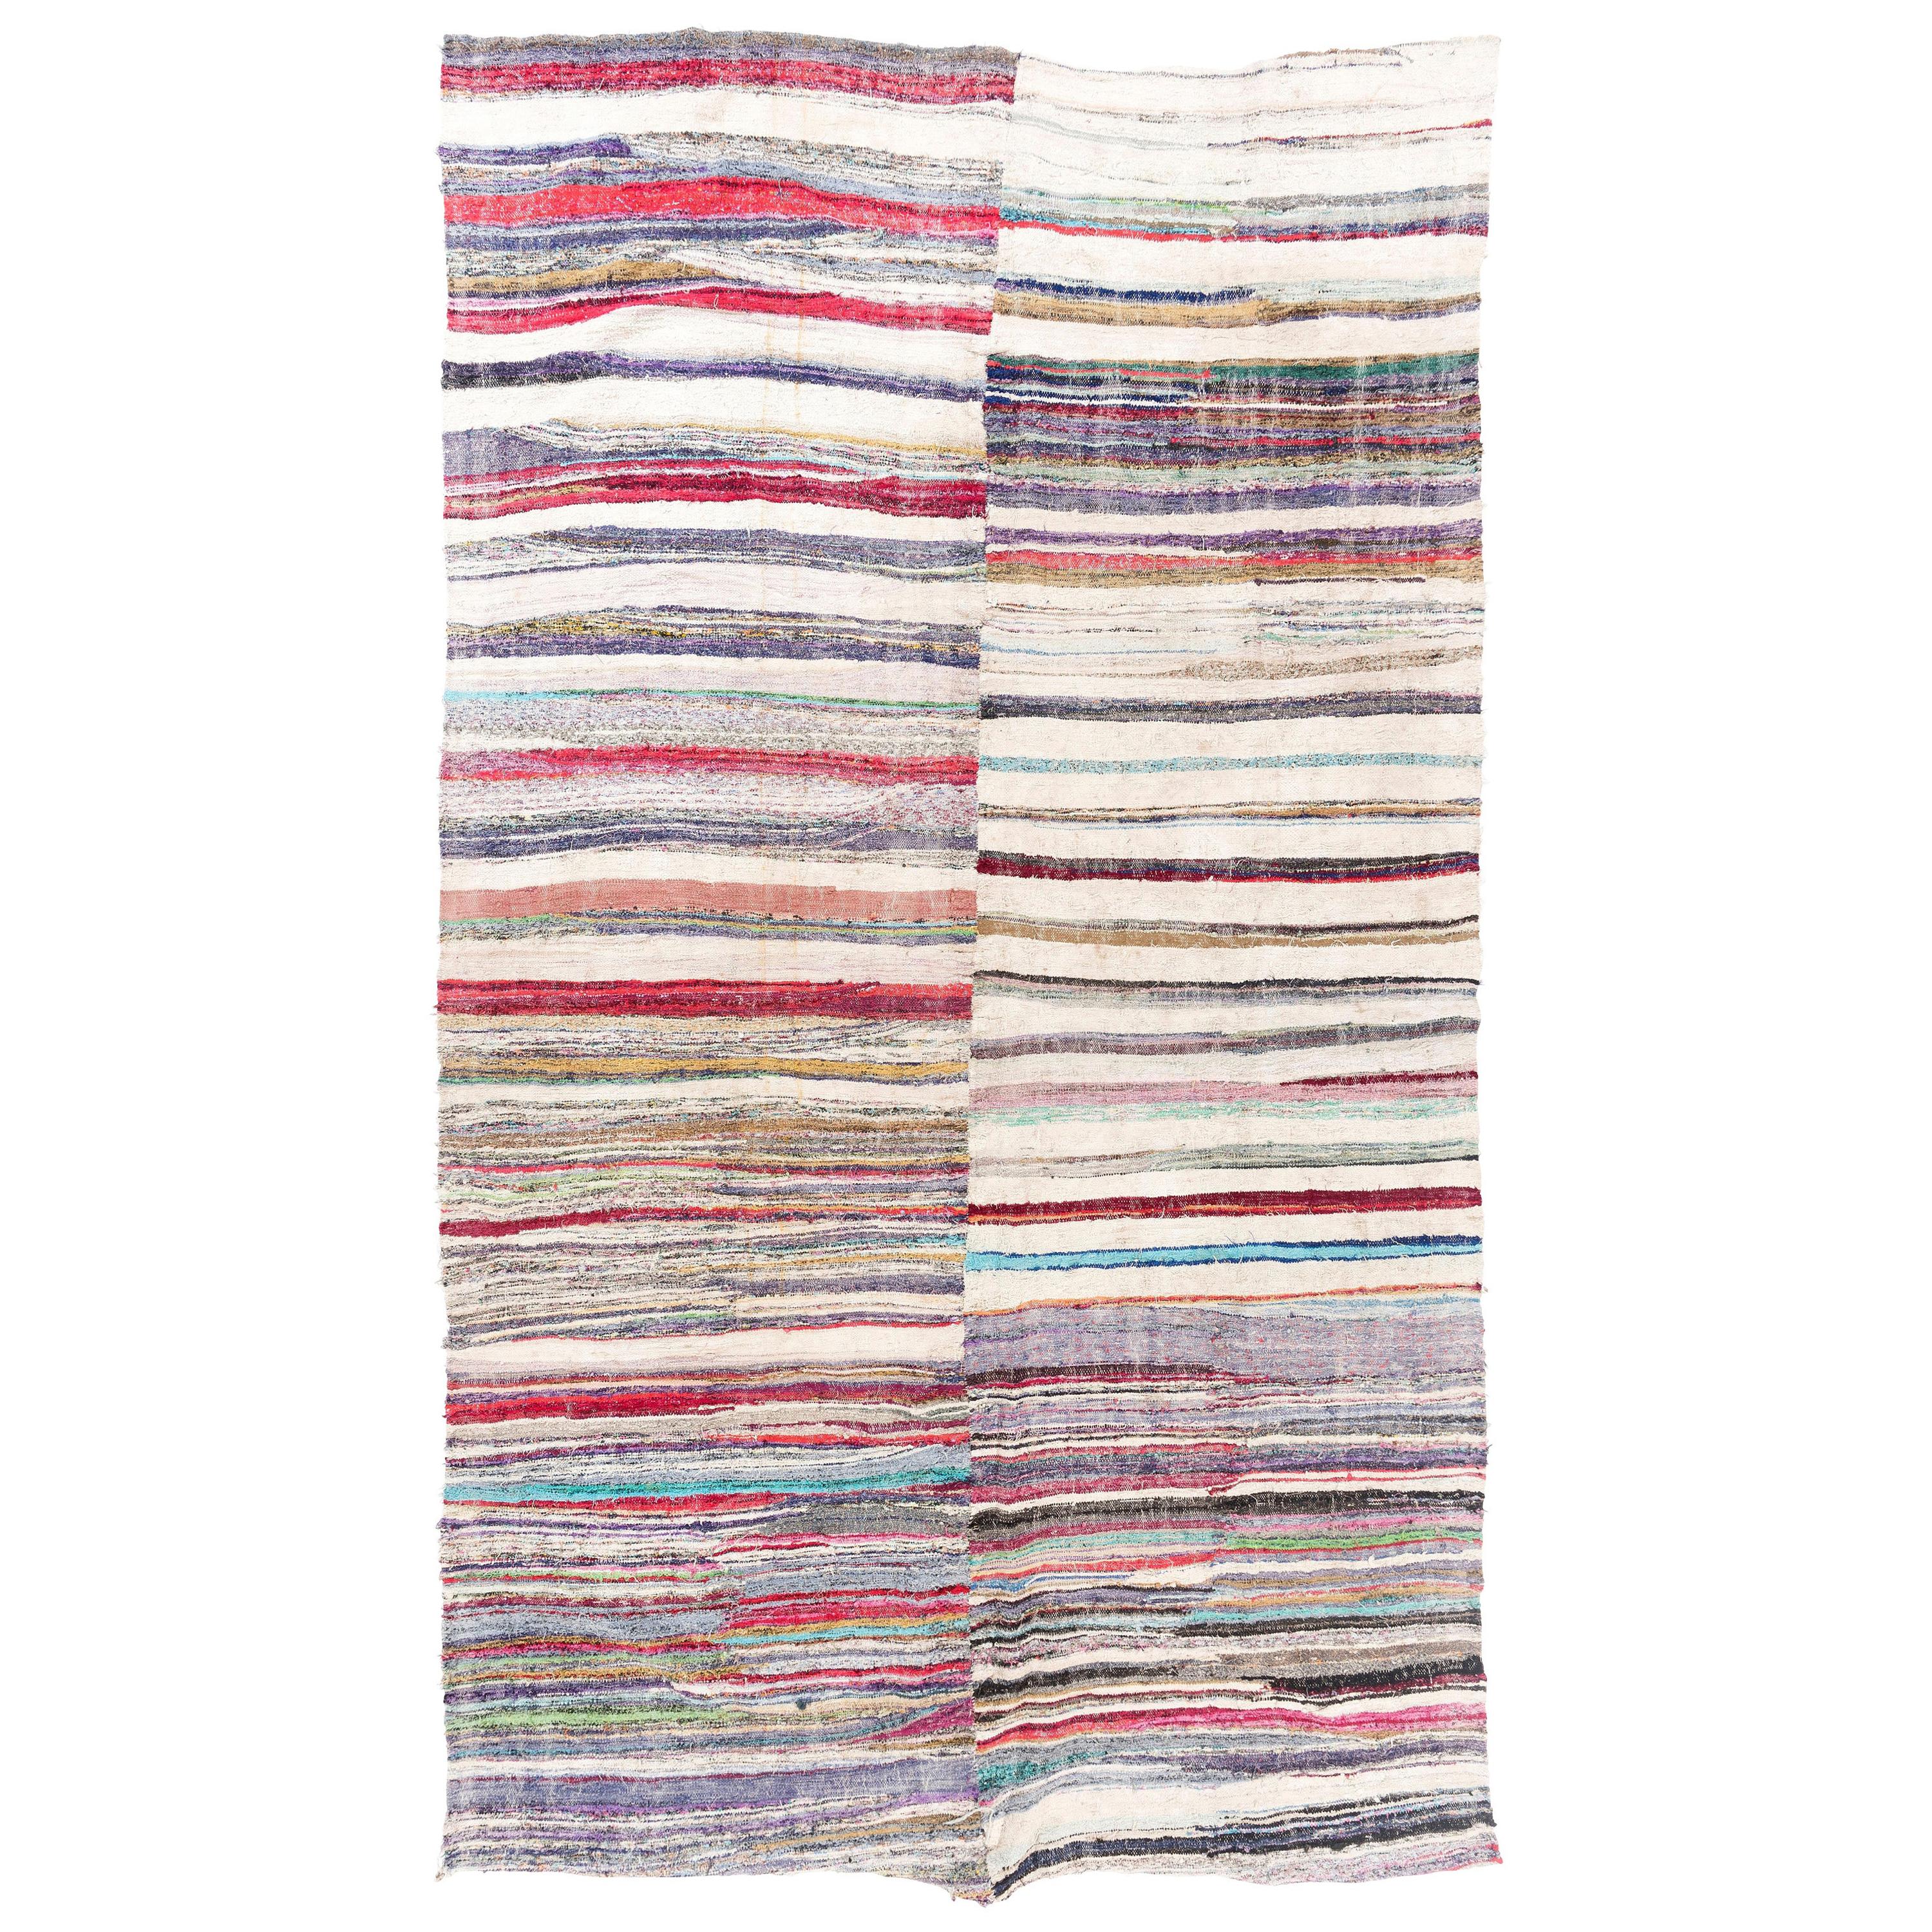 7.4x12.7 Ft Vintage Striped Pattern Cotton Rag Rug. Flat-Weave Kilim Carpet For Sale